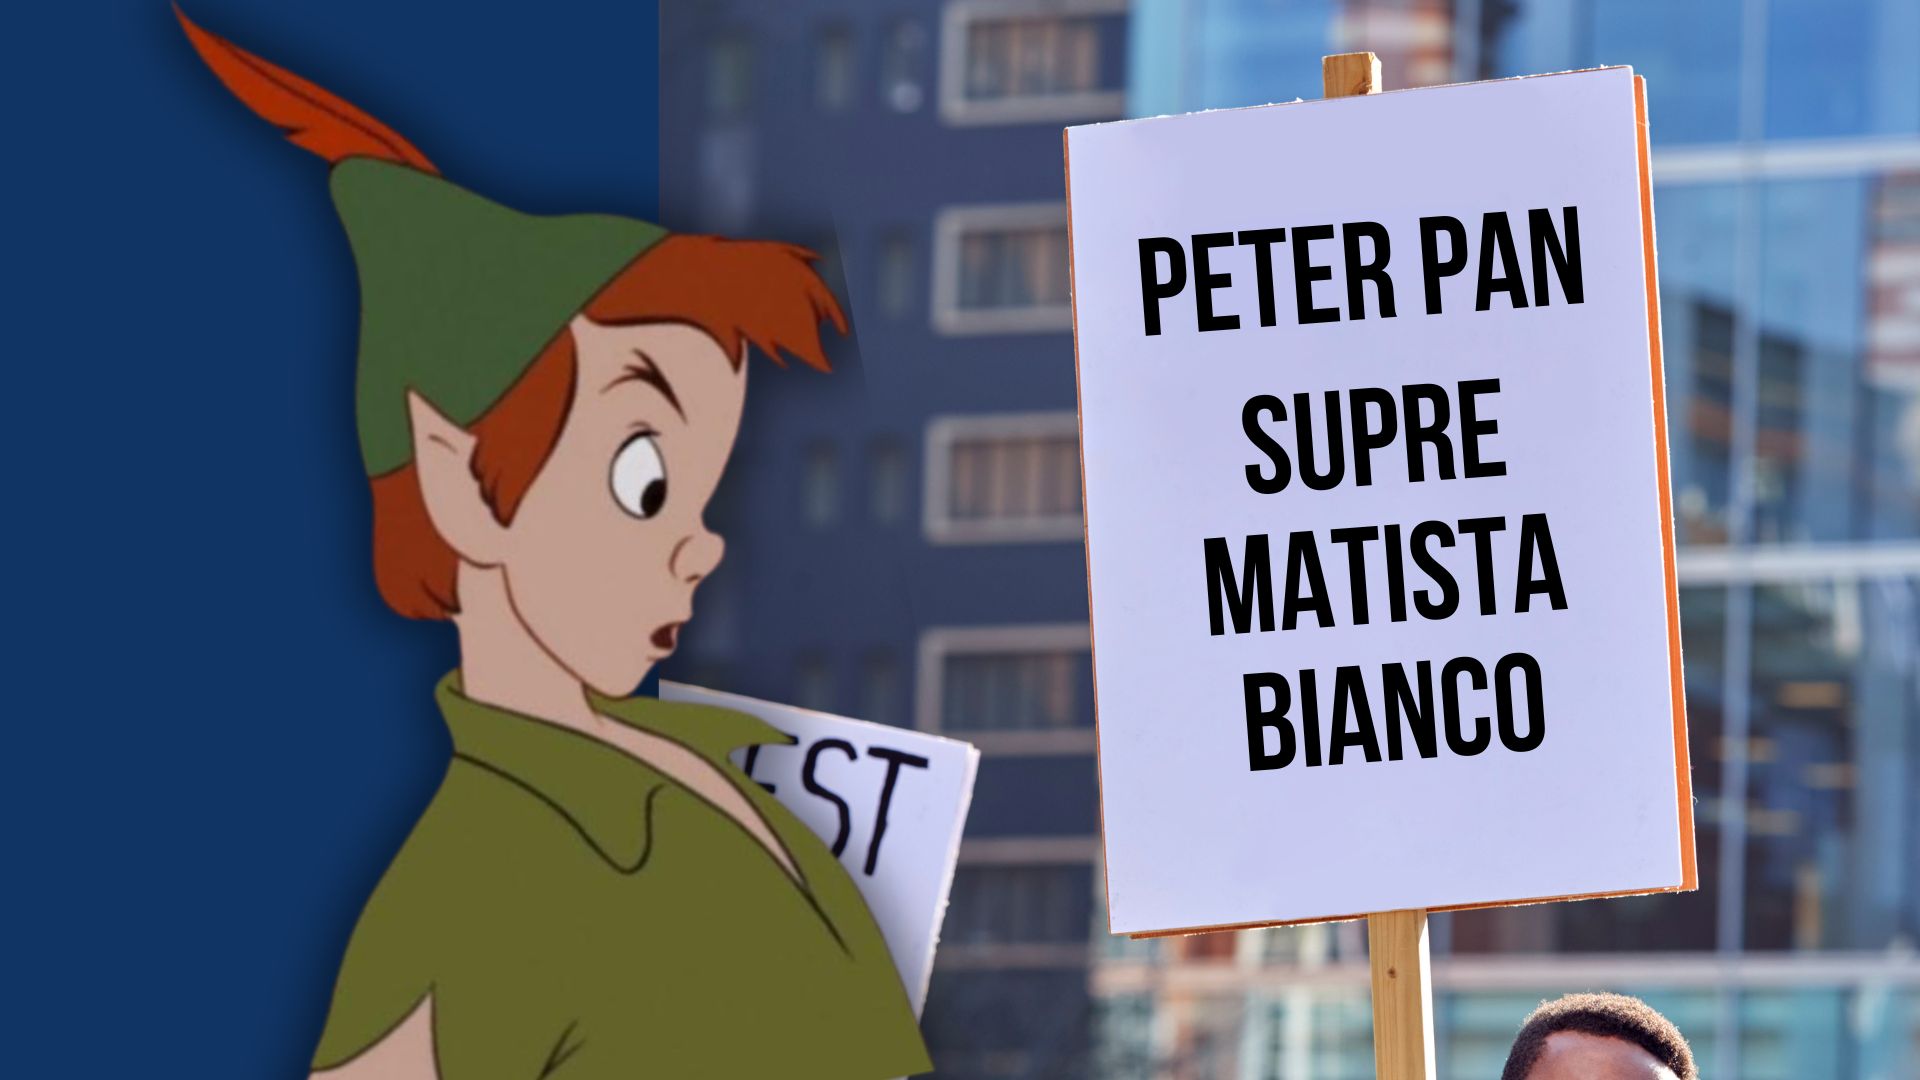 Peter Pan al rogo: è un suprematista bianco